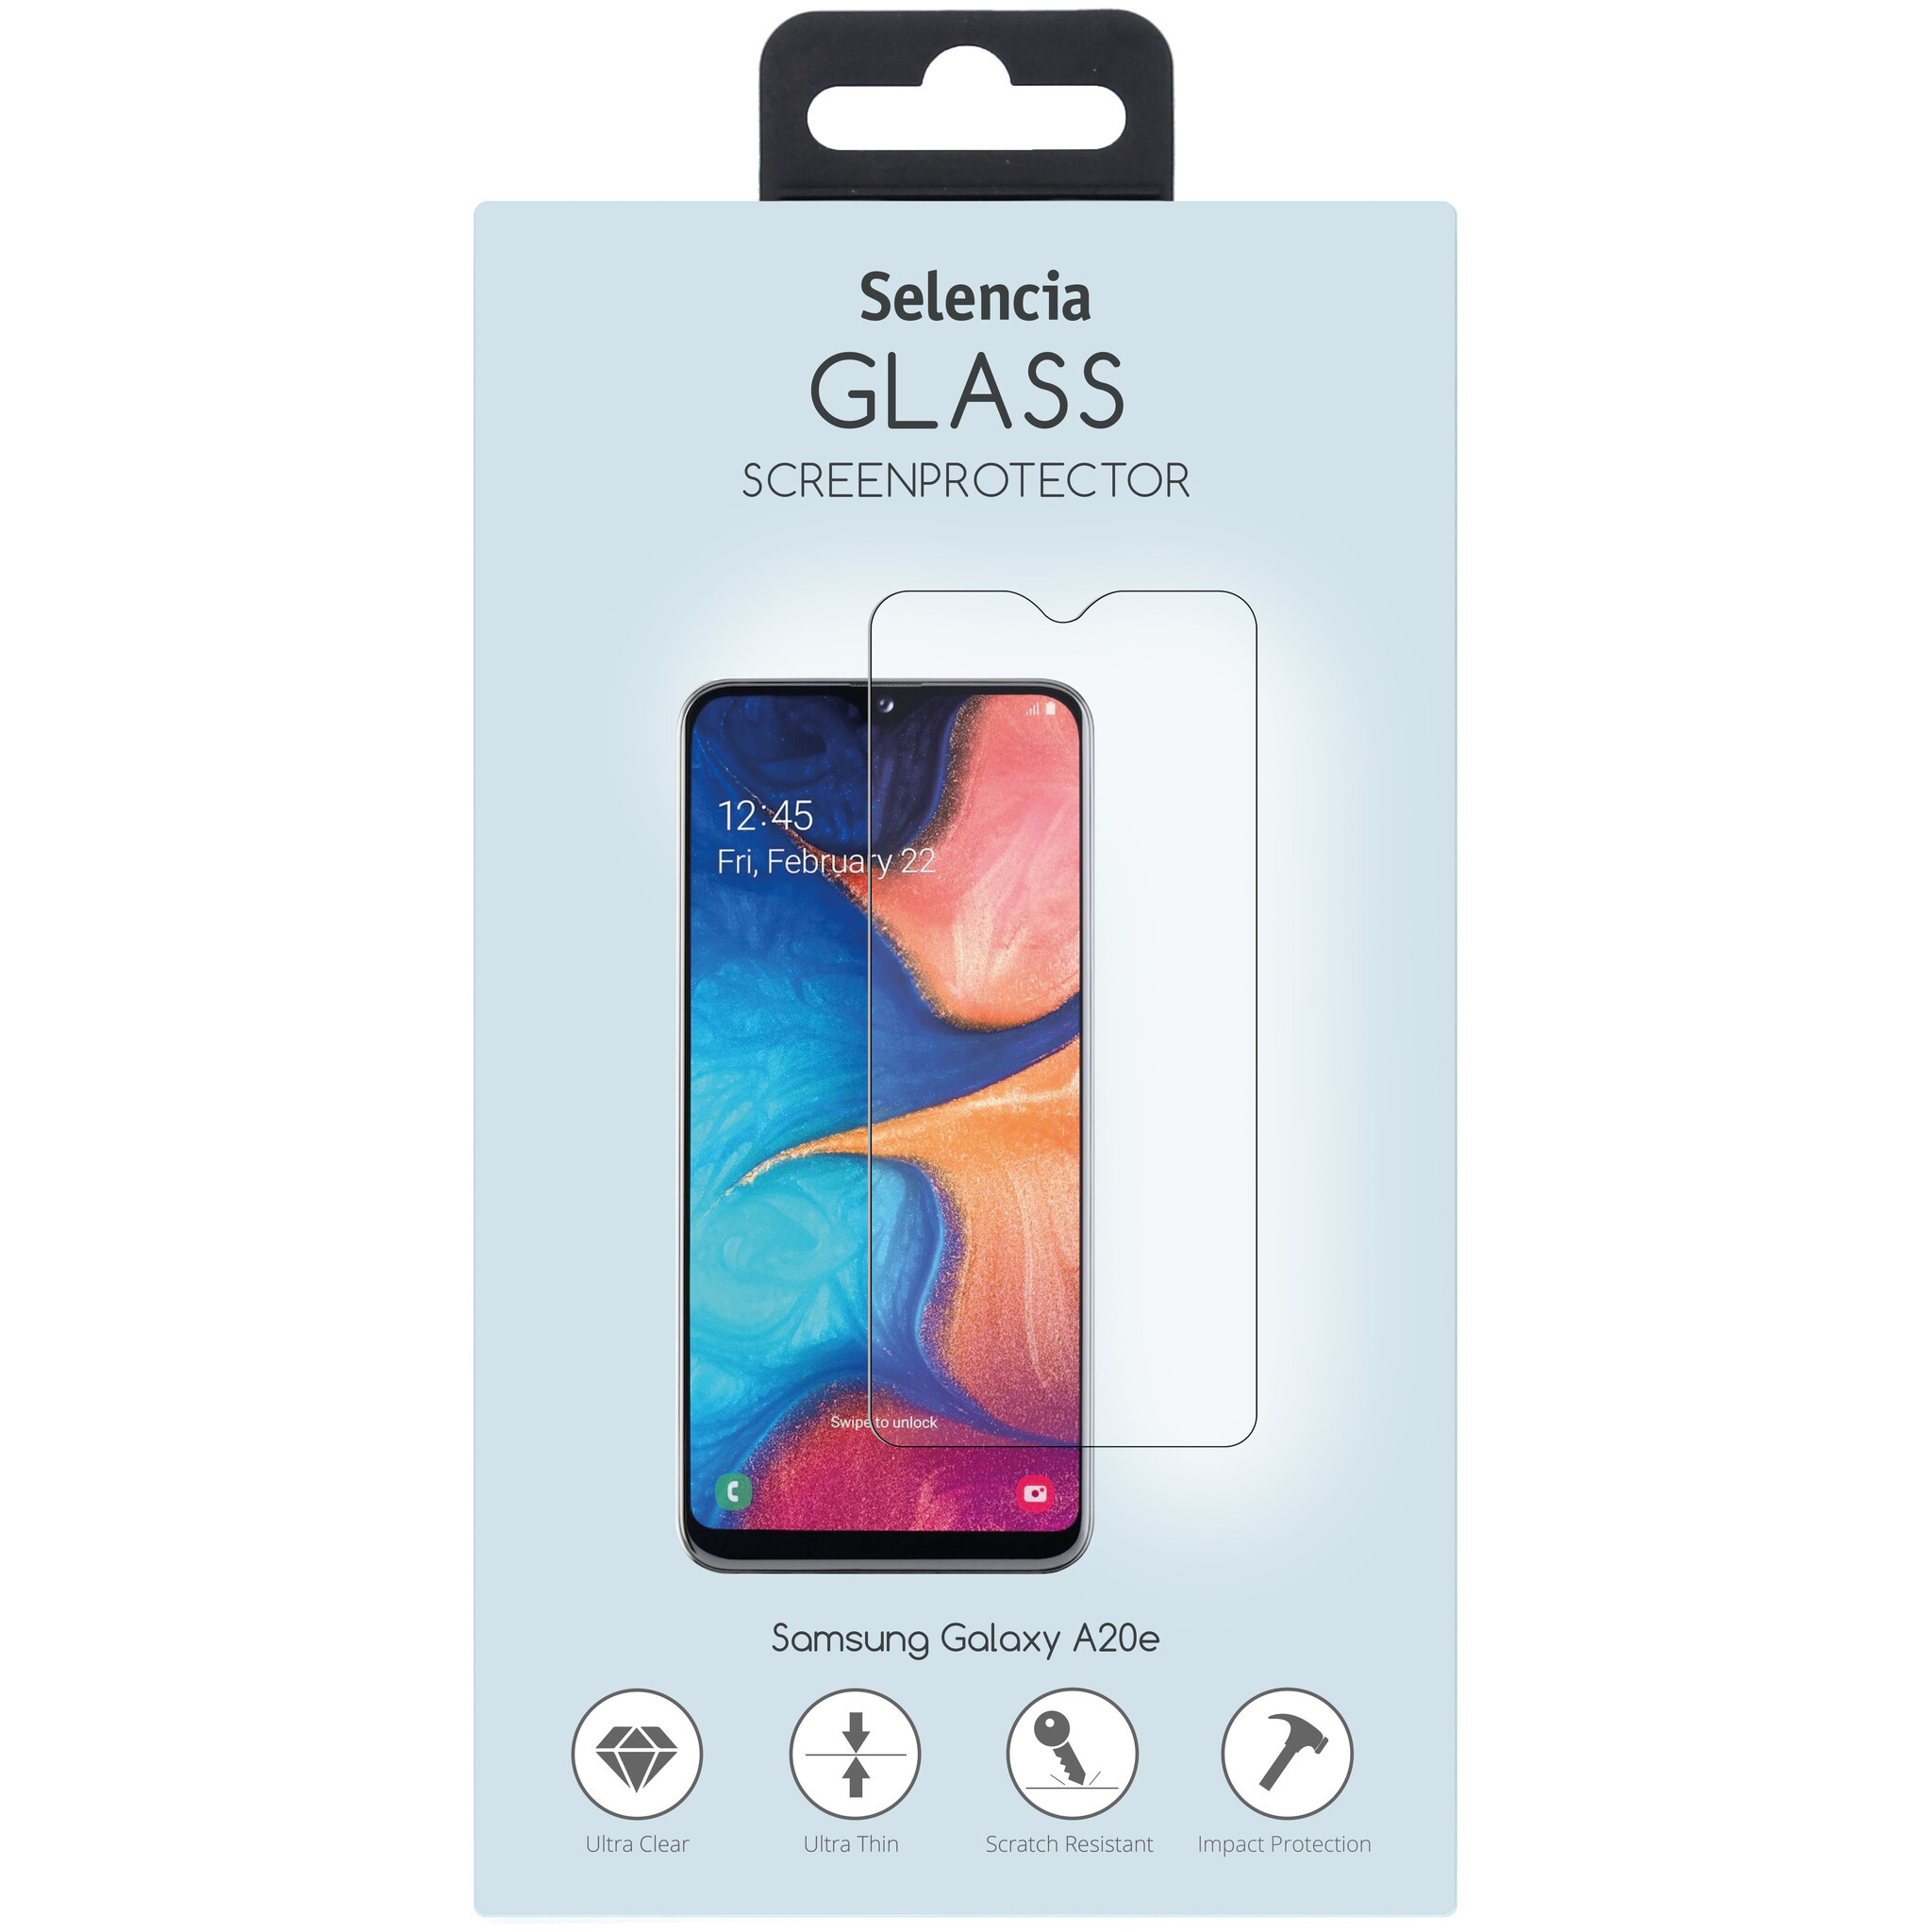 Selencia Glas Screenprotector voor de Samsung Galaxy A20e